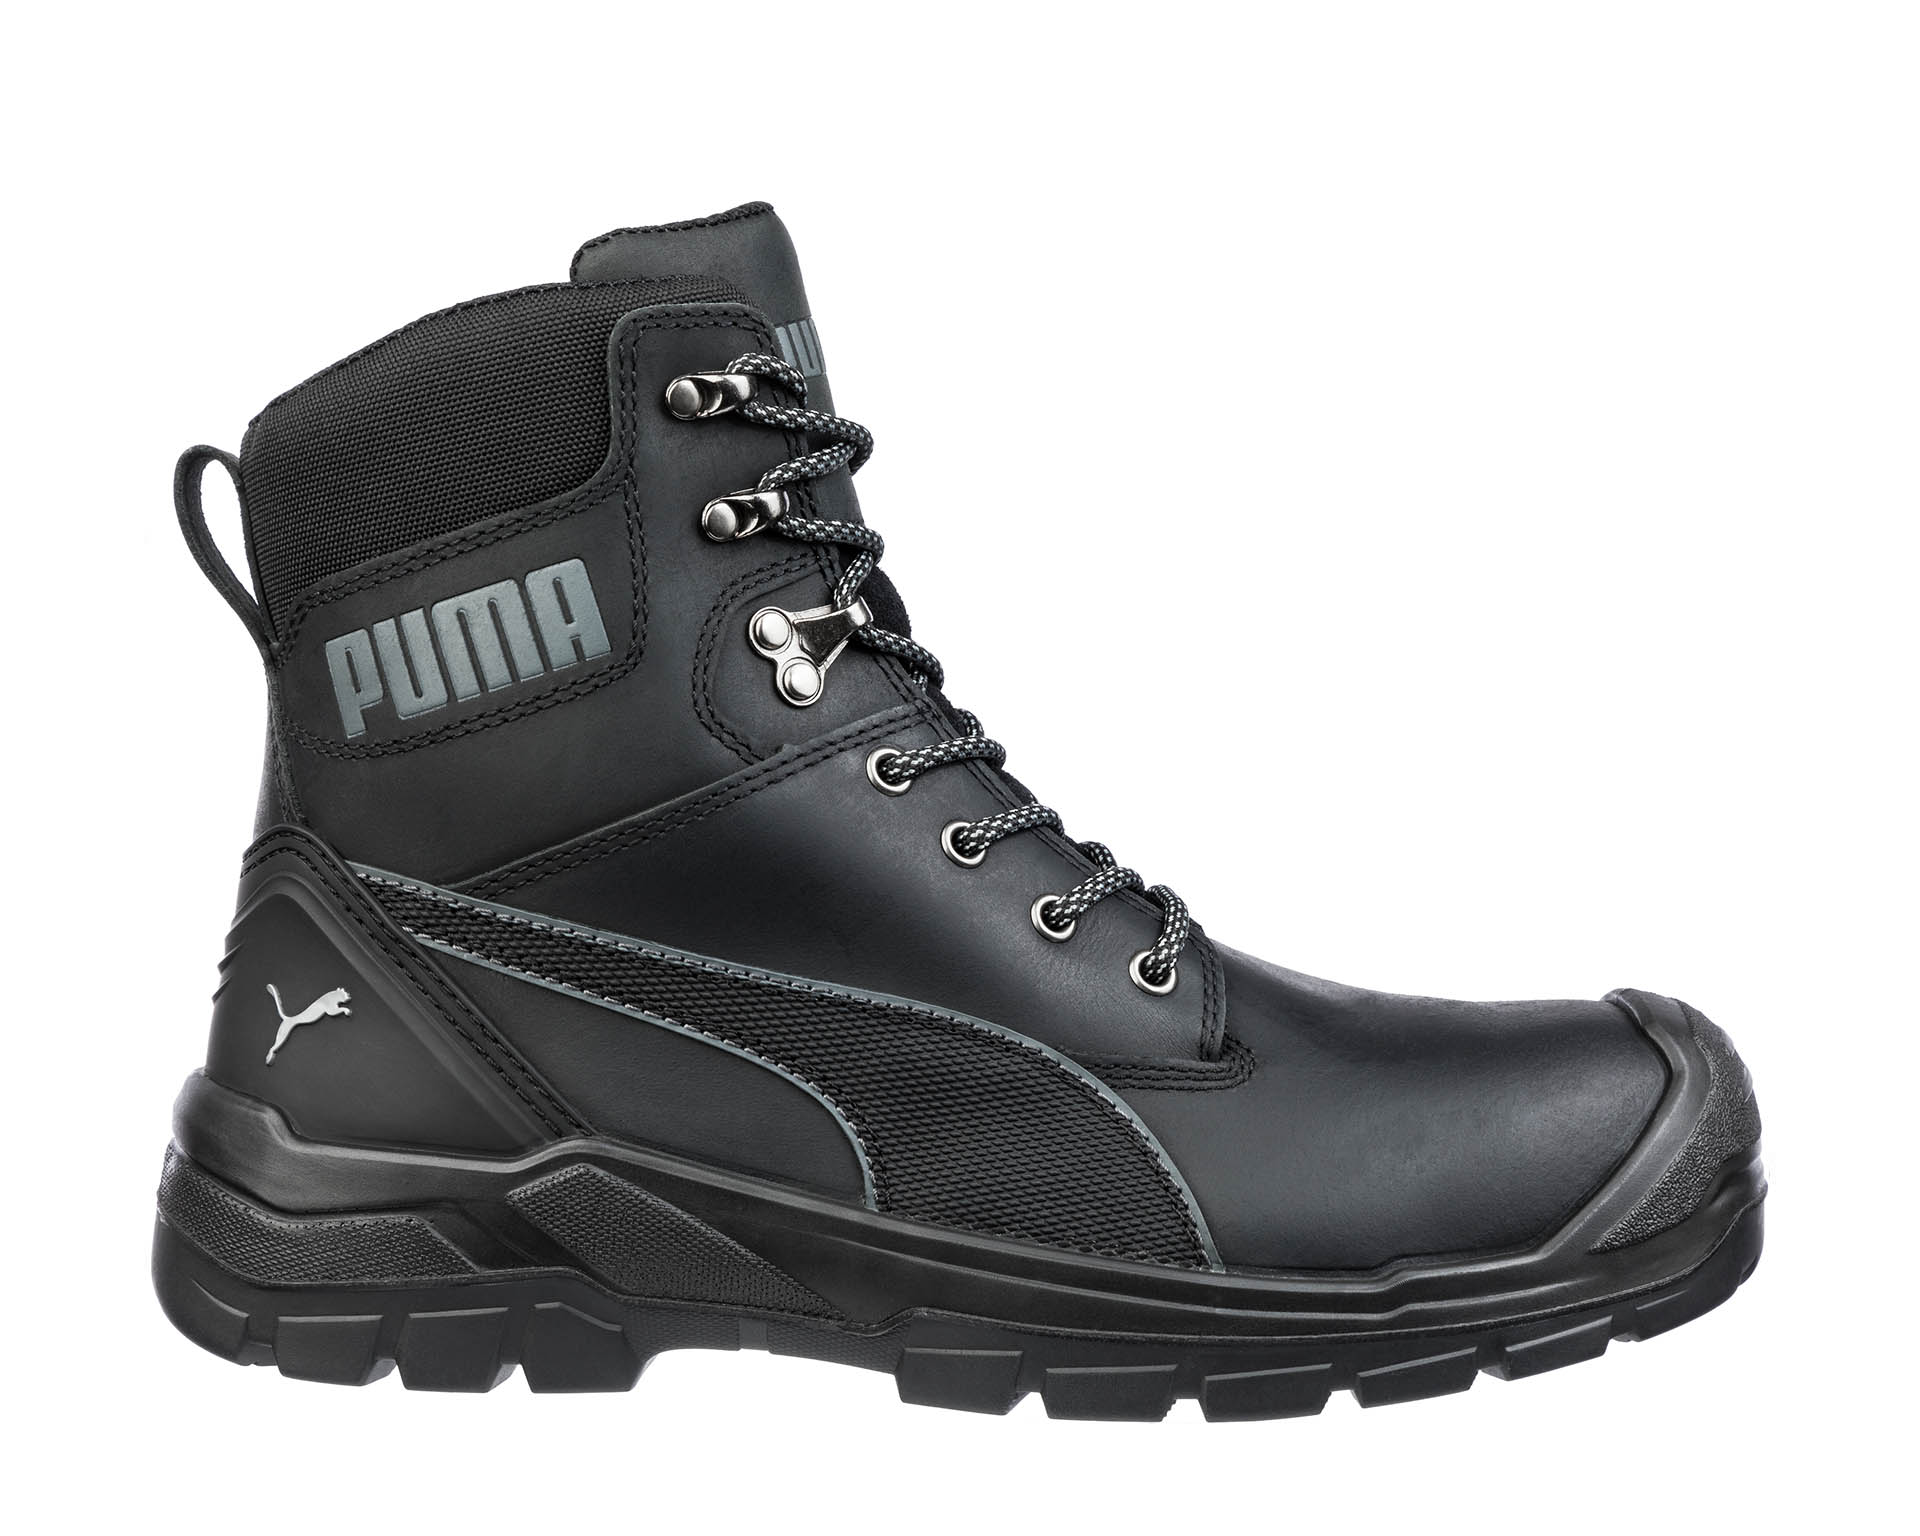 USA shoes ASTM CONQUEST EH Safety HIGH|PUMA BLACK SR CTX Puma | SAFETY work WP